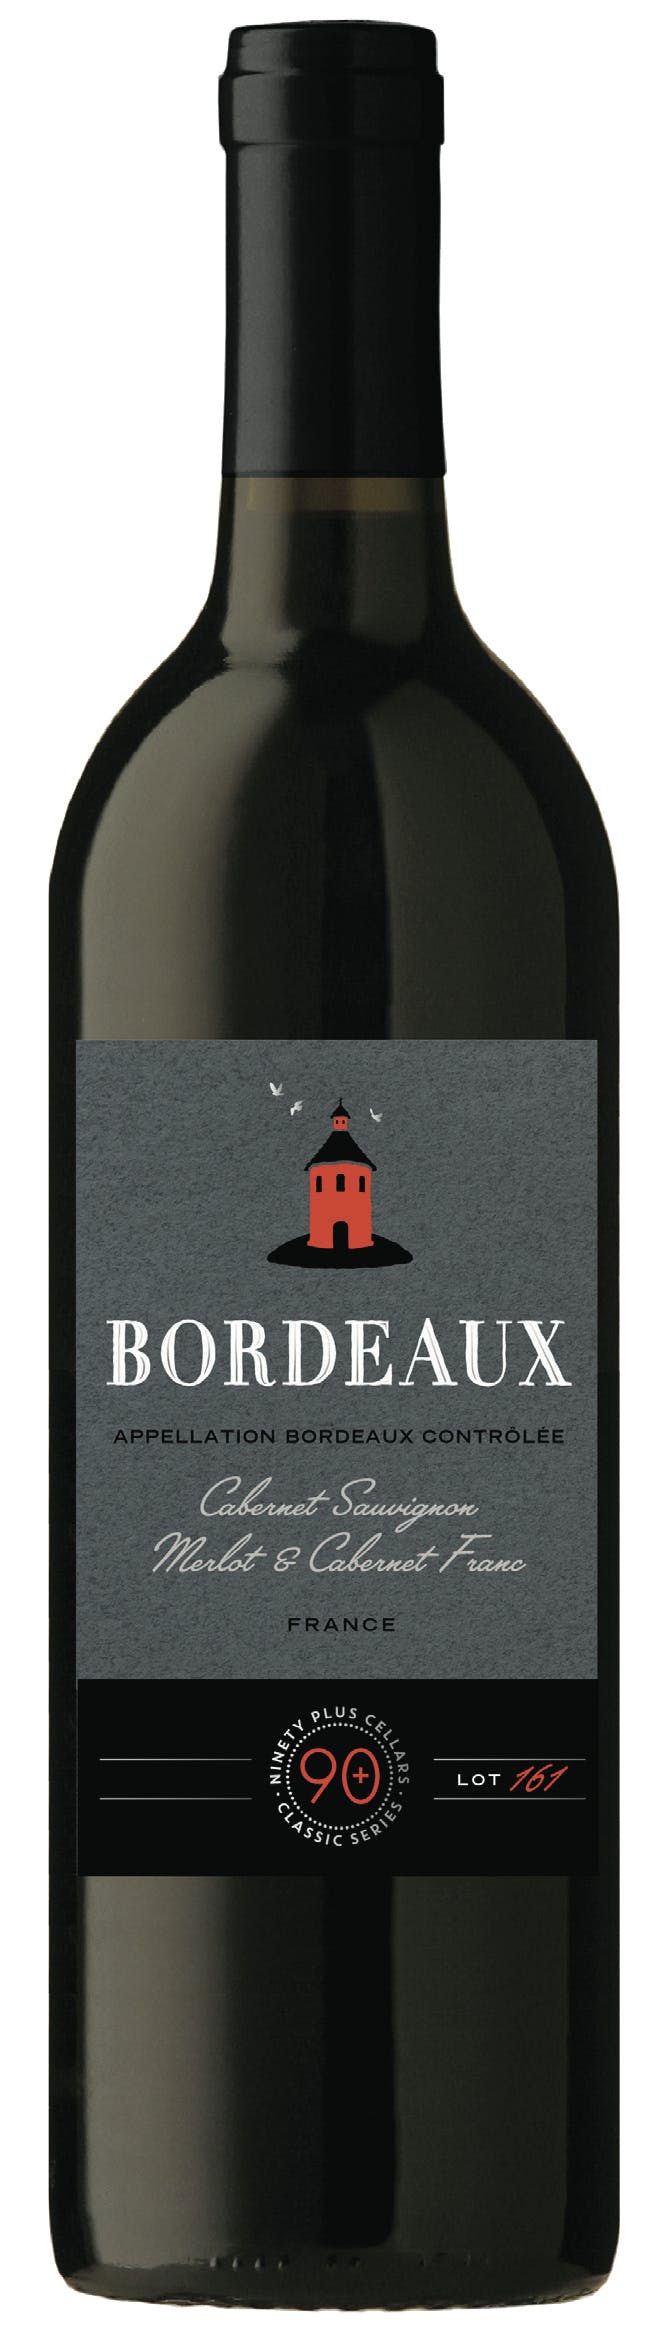 Bordeaux - Kelly's Liquor